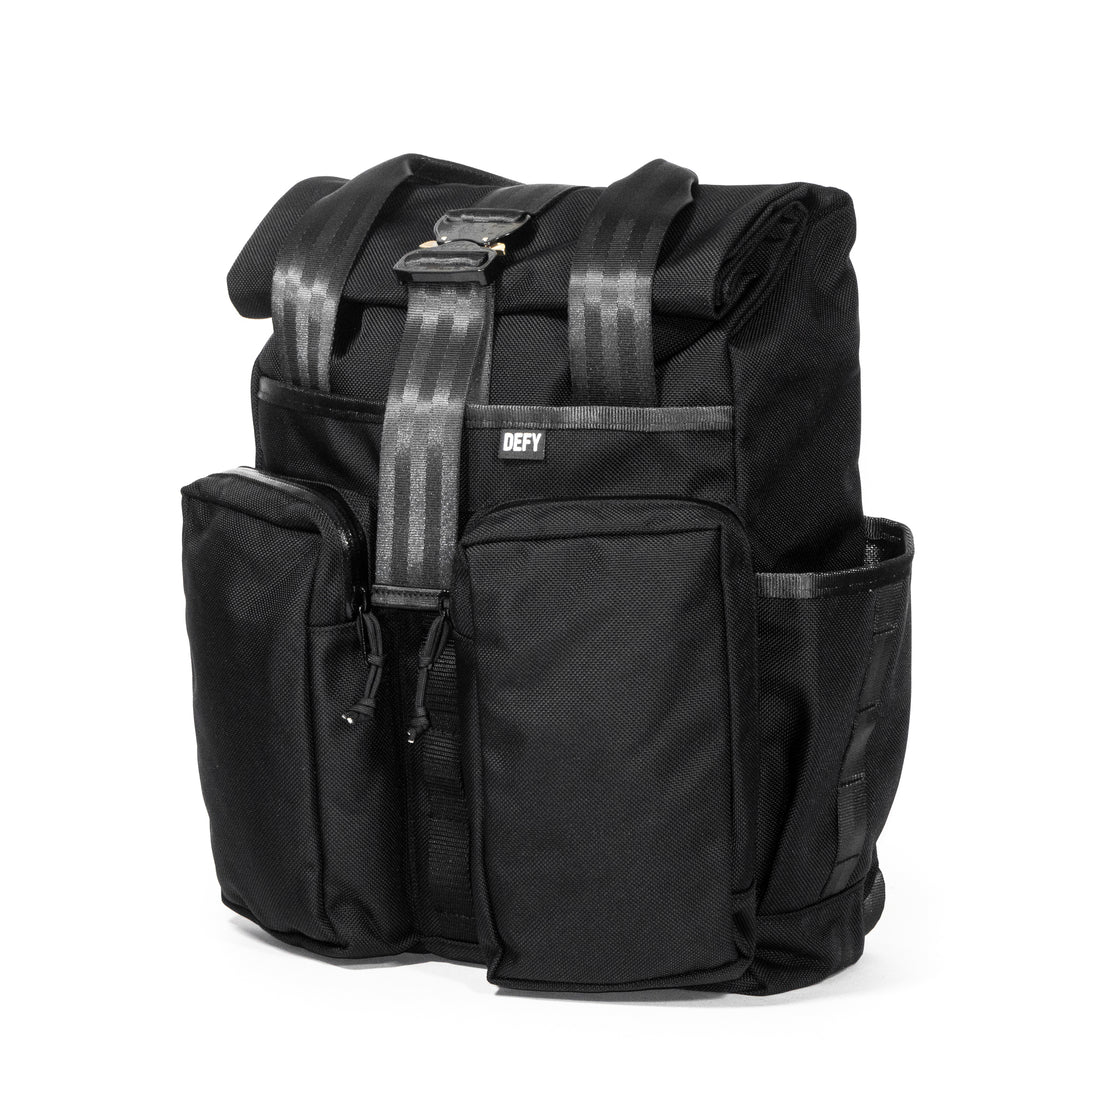 VerBockel 'Day Pack' Roll Top Backpack 2.0 | Black Ballistic Nylon 